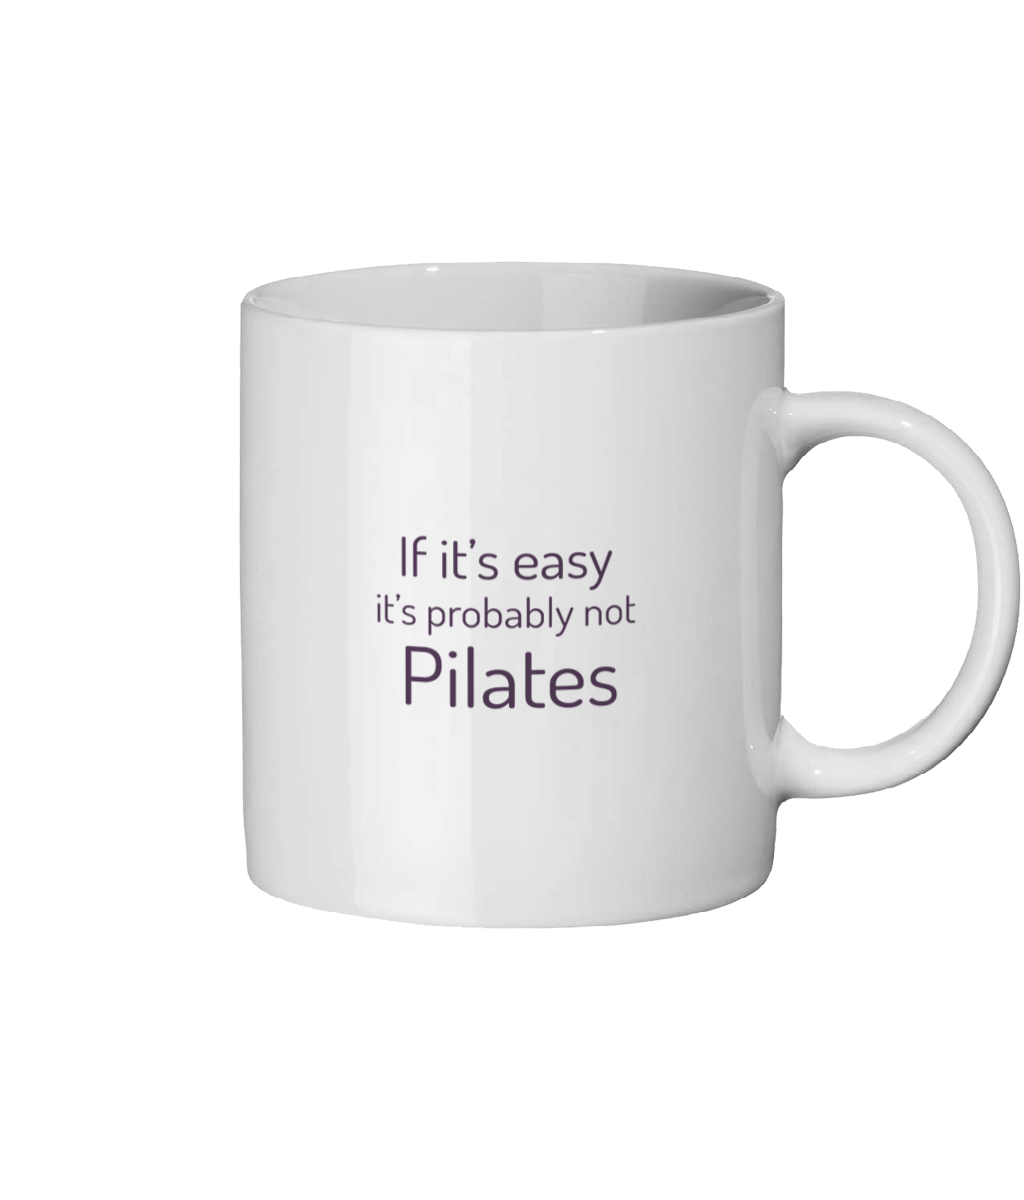 Pilates quote gift mug